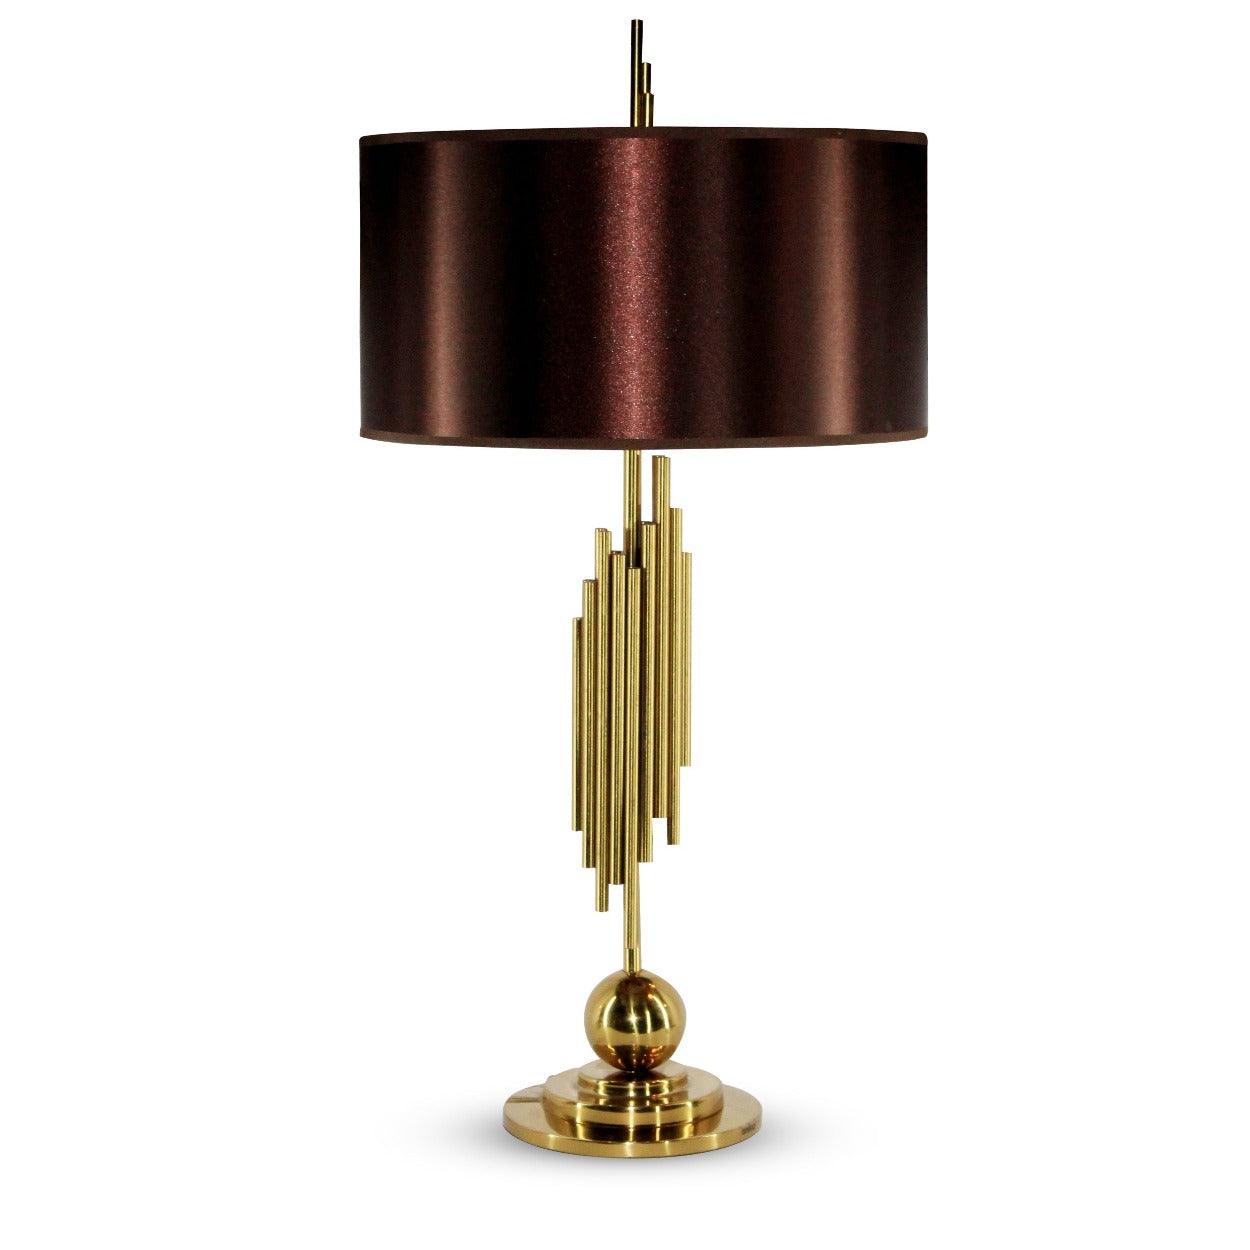 ORGAN CONTEMPORARY TABLE LAMP GOLD FINISH - Ankur Lighting